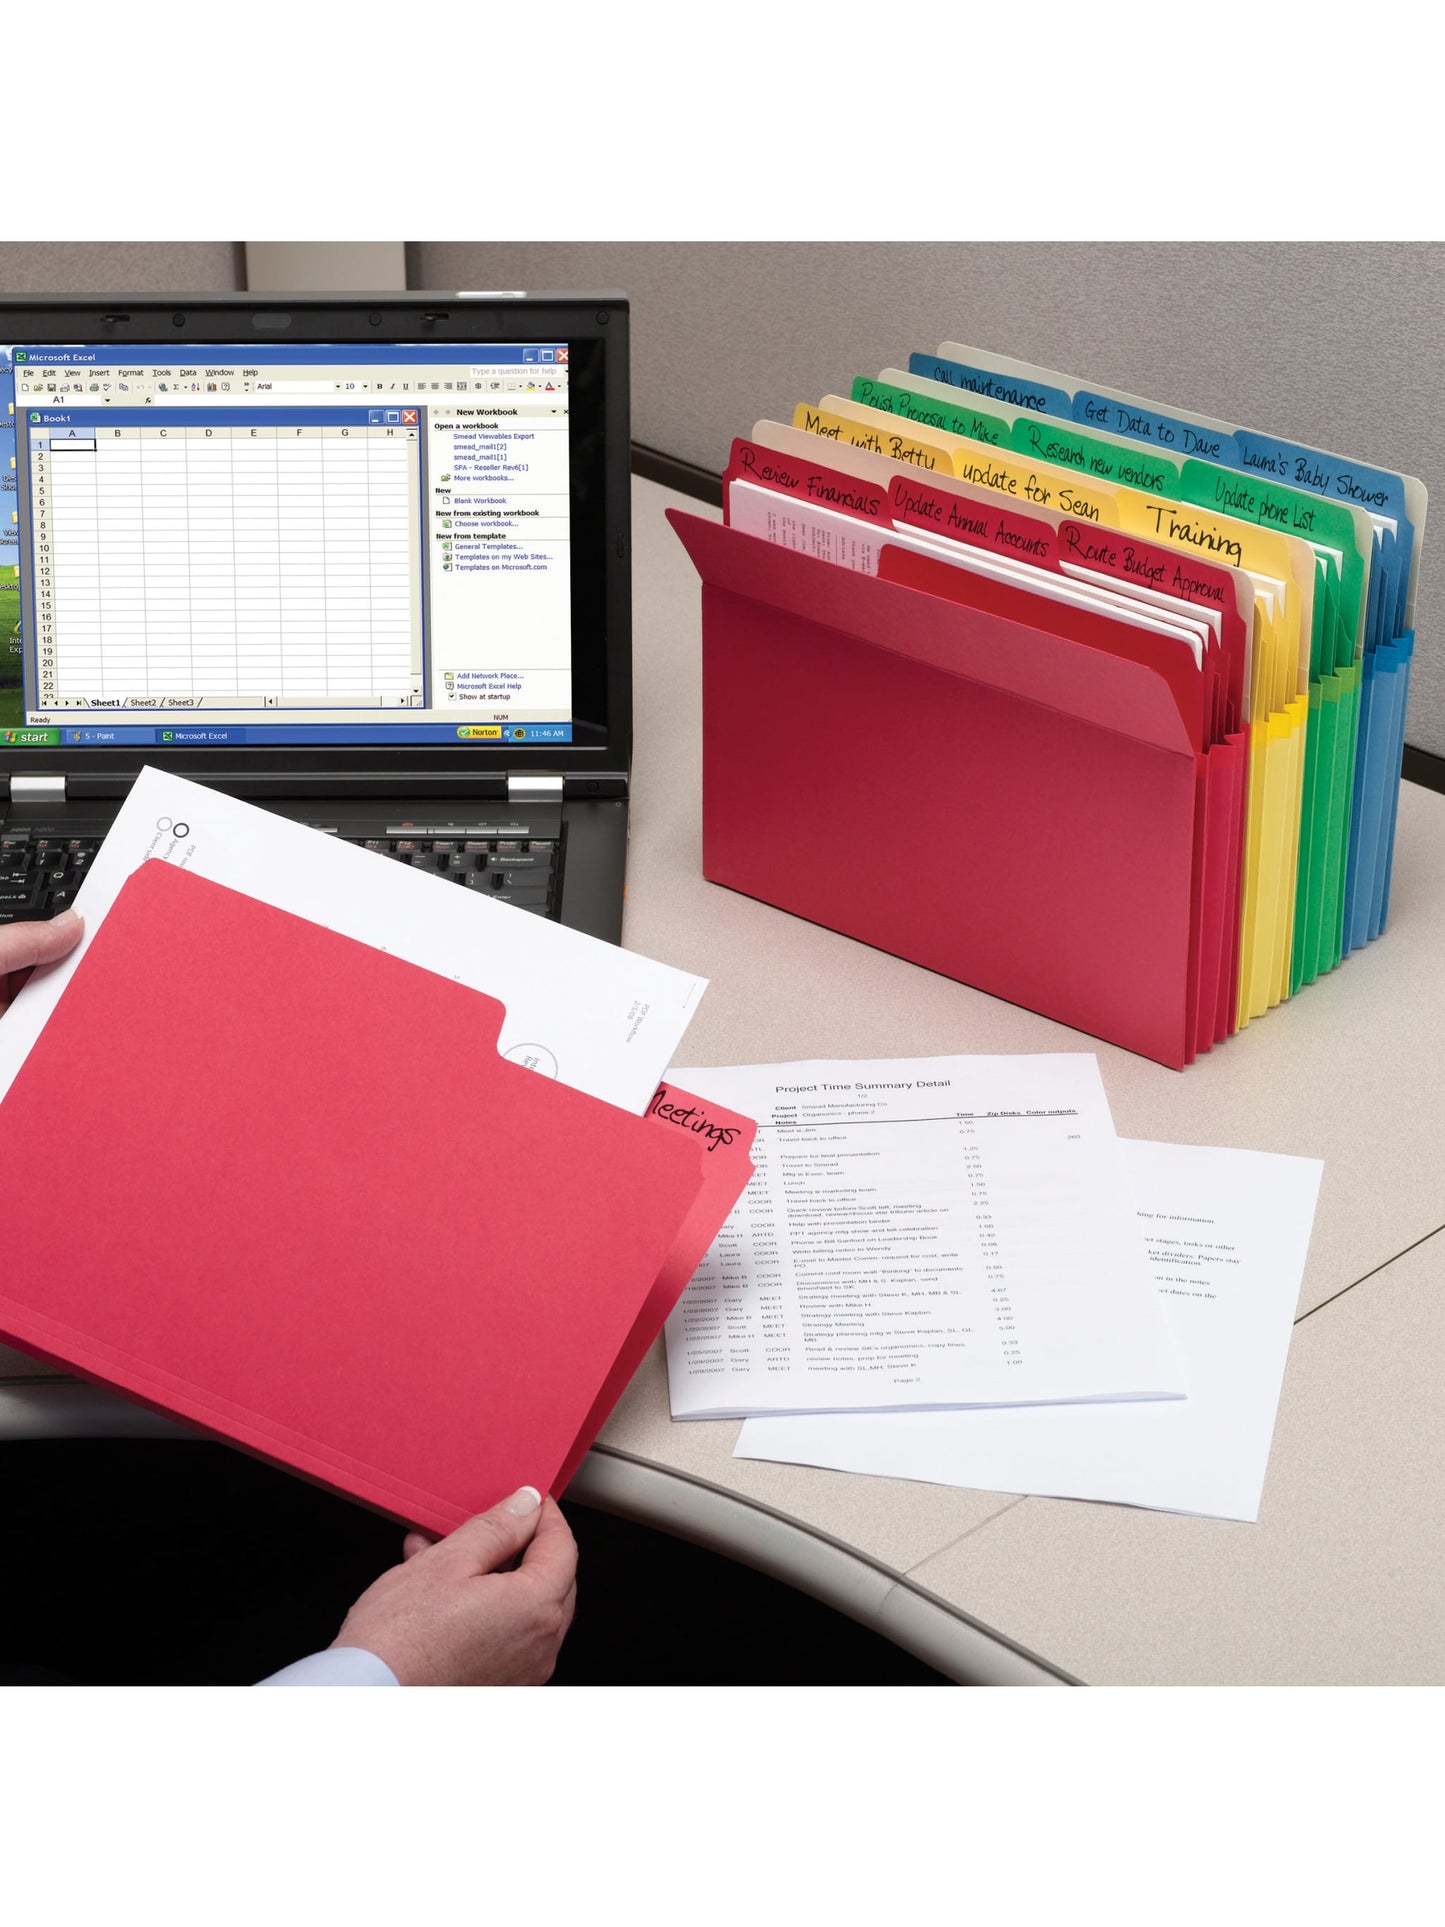 SuperTab® File Folders, 1/3-Cut Tab, Assorted Colors Color, Letter Size, Set of 100, 086486119870